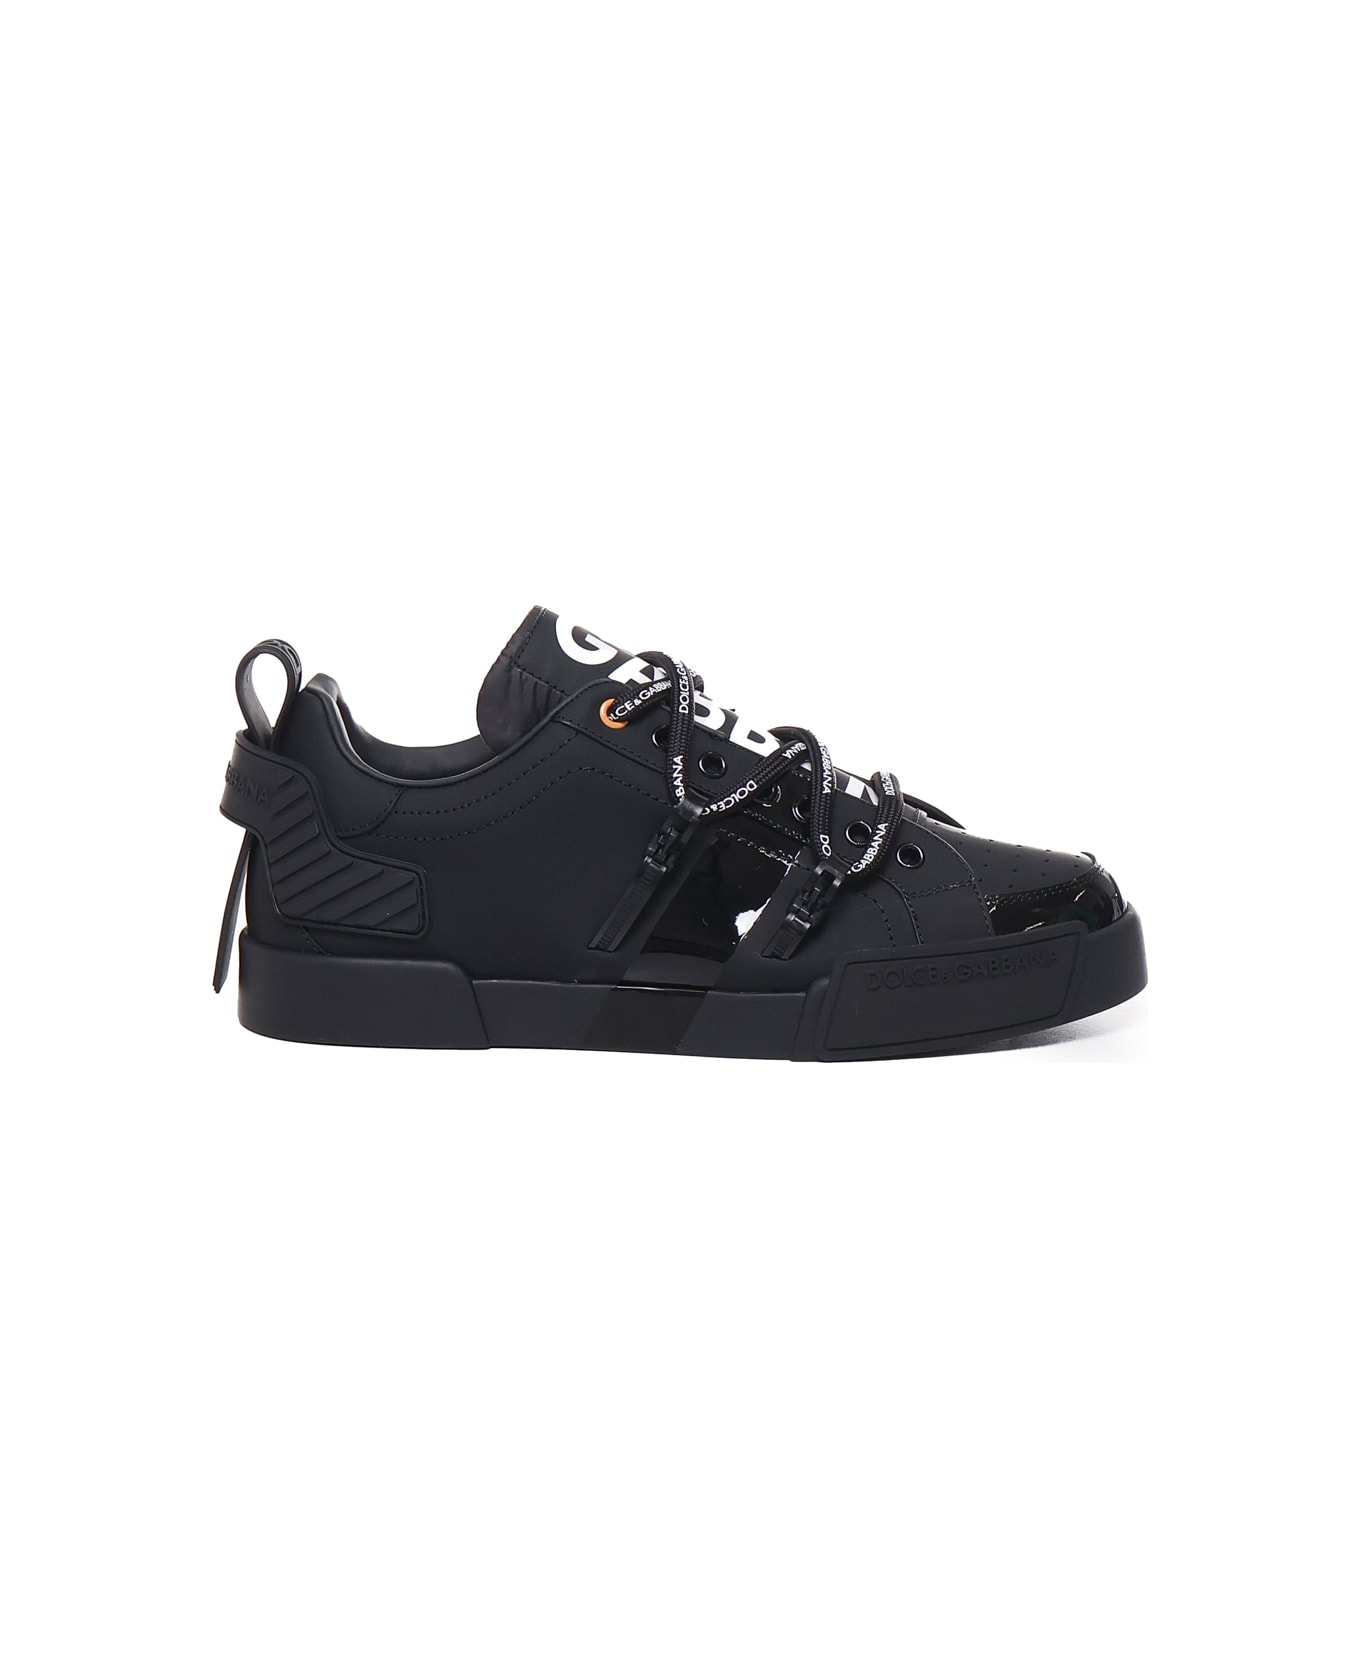 Dolce & Gabbana Portofino Leather And Patent Leather Sneakers - Black